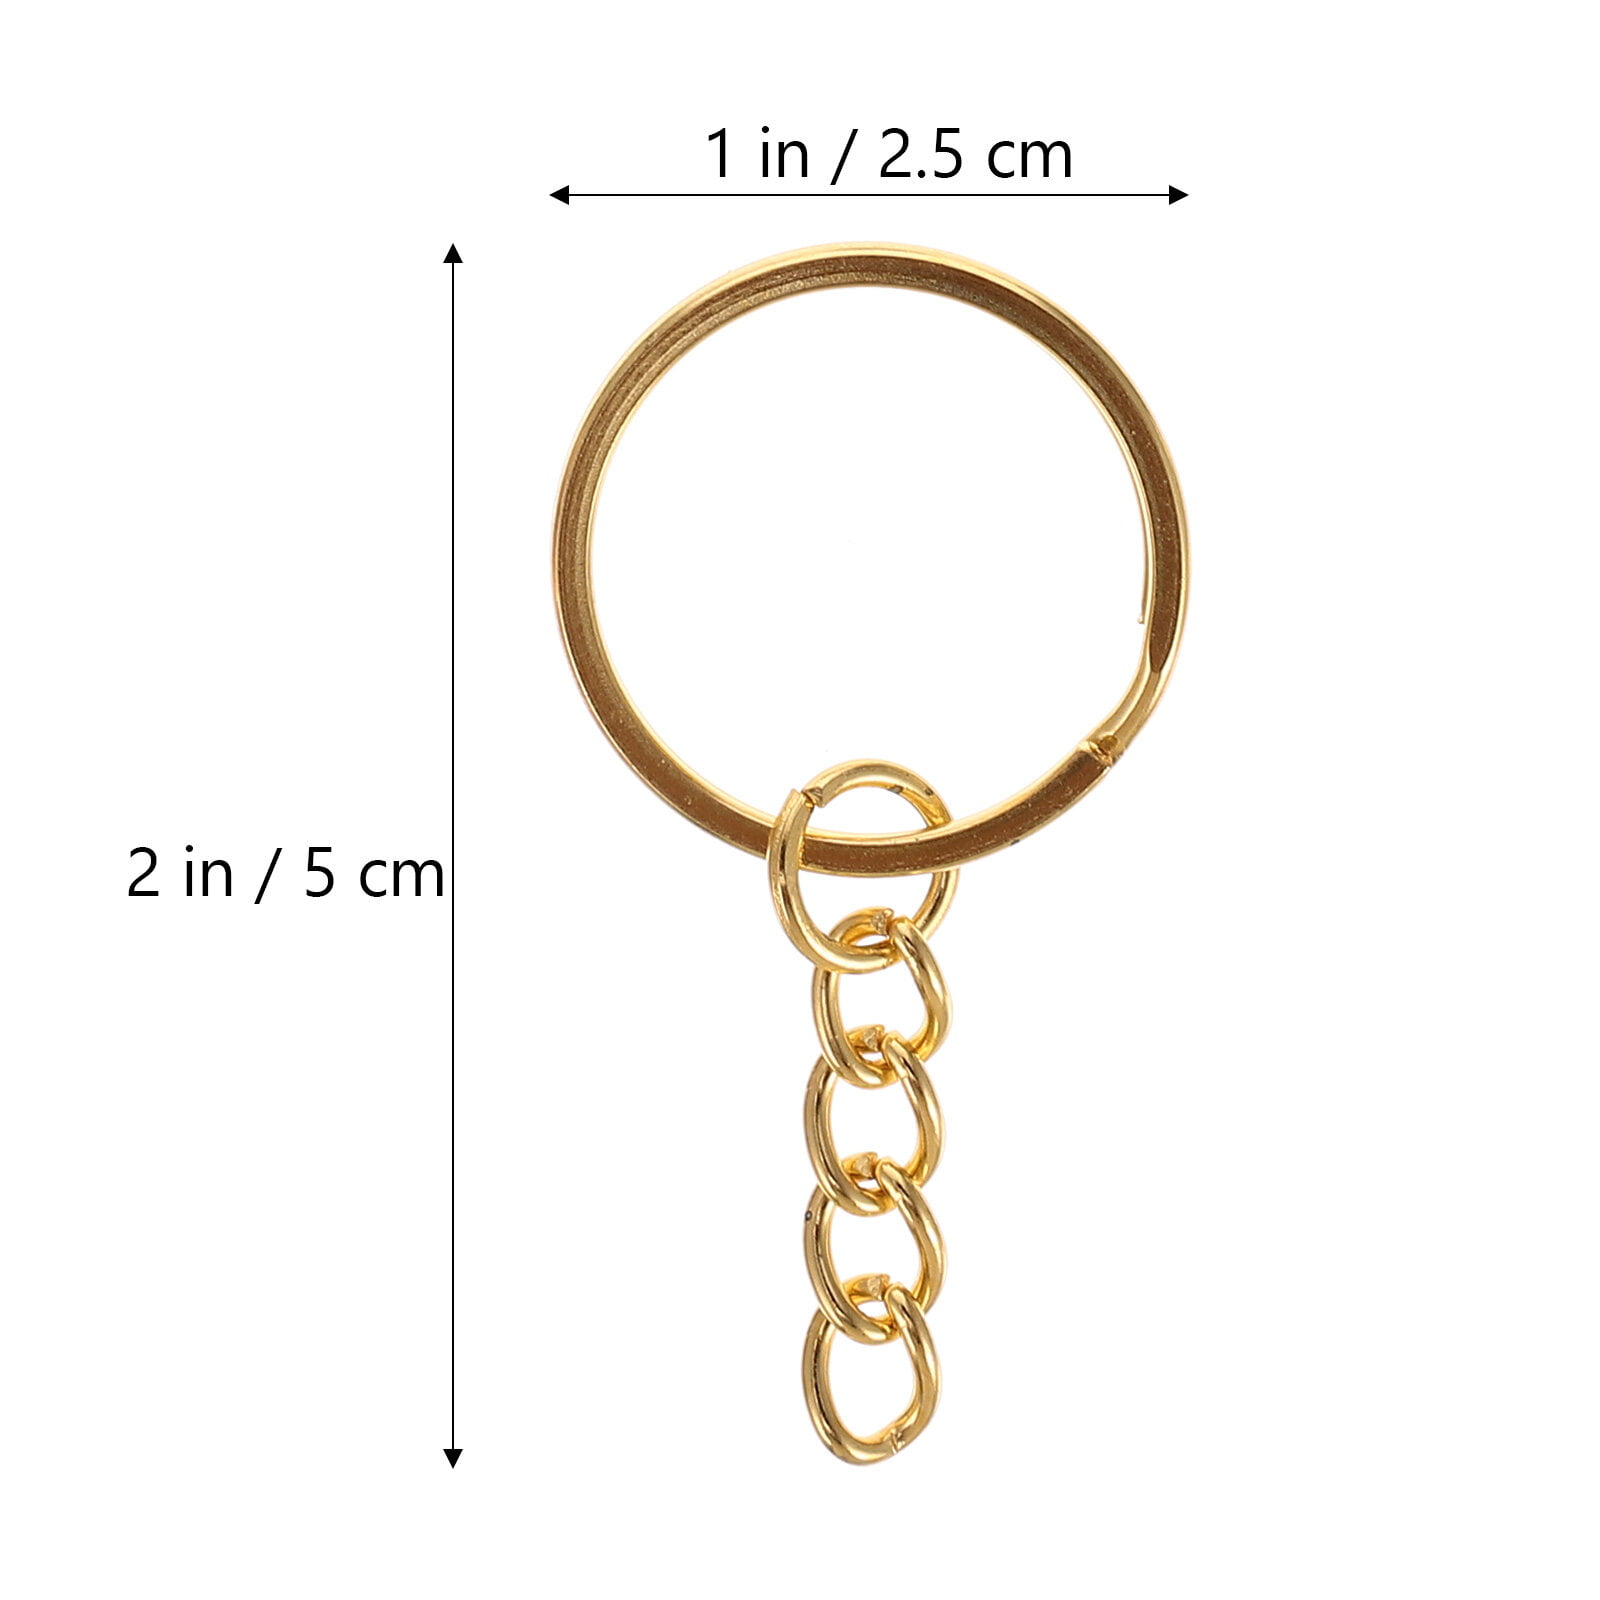 Homemaxs 450pcs Key Chain Making Kit DIY Keychain Supplies Keychain with Chain Key Rings Screw Eye Pin, Women's, Size: 5x2.5x0.60cm